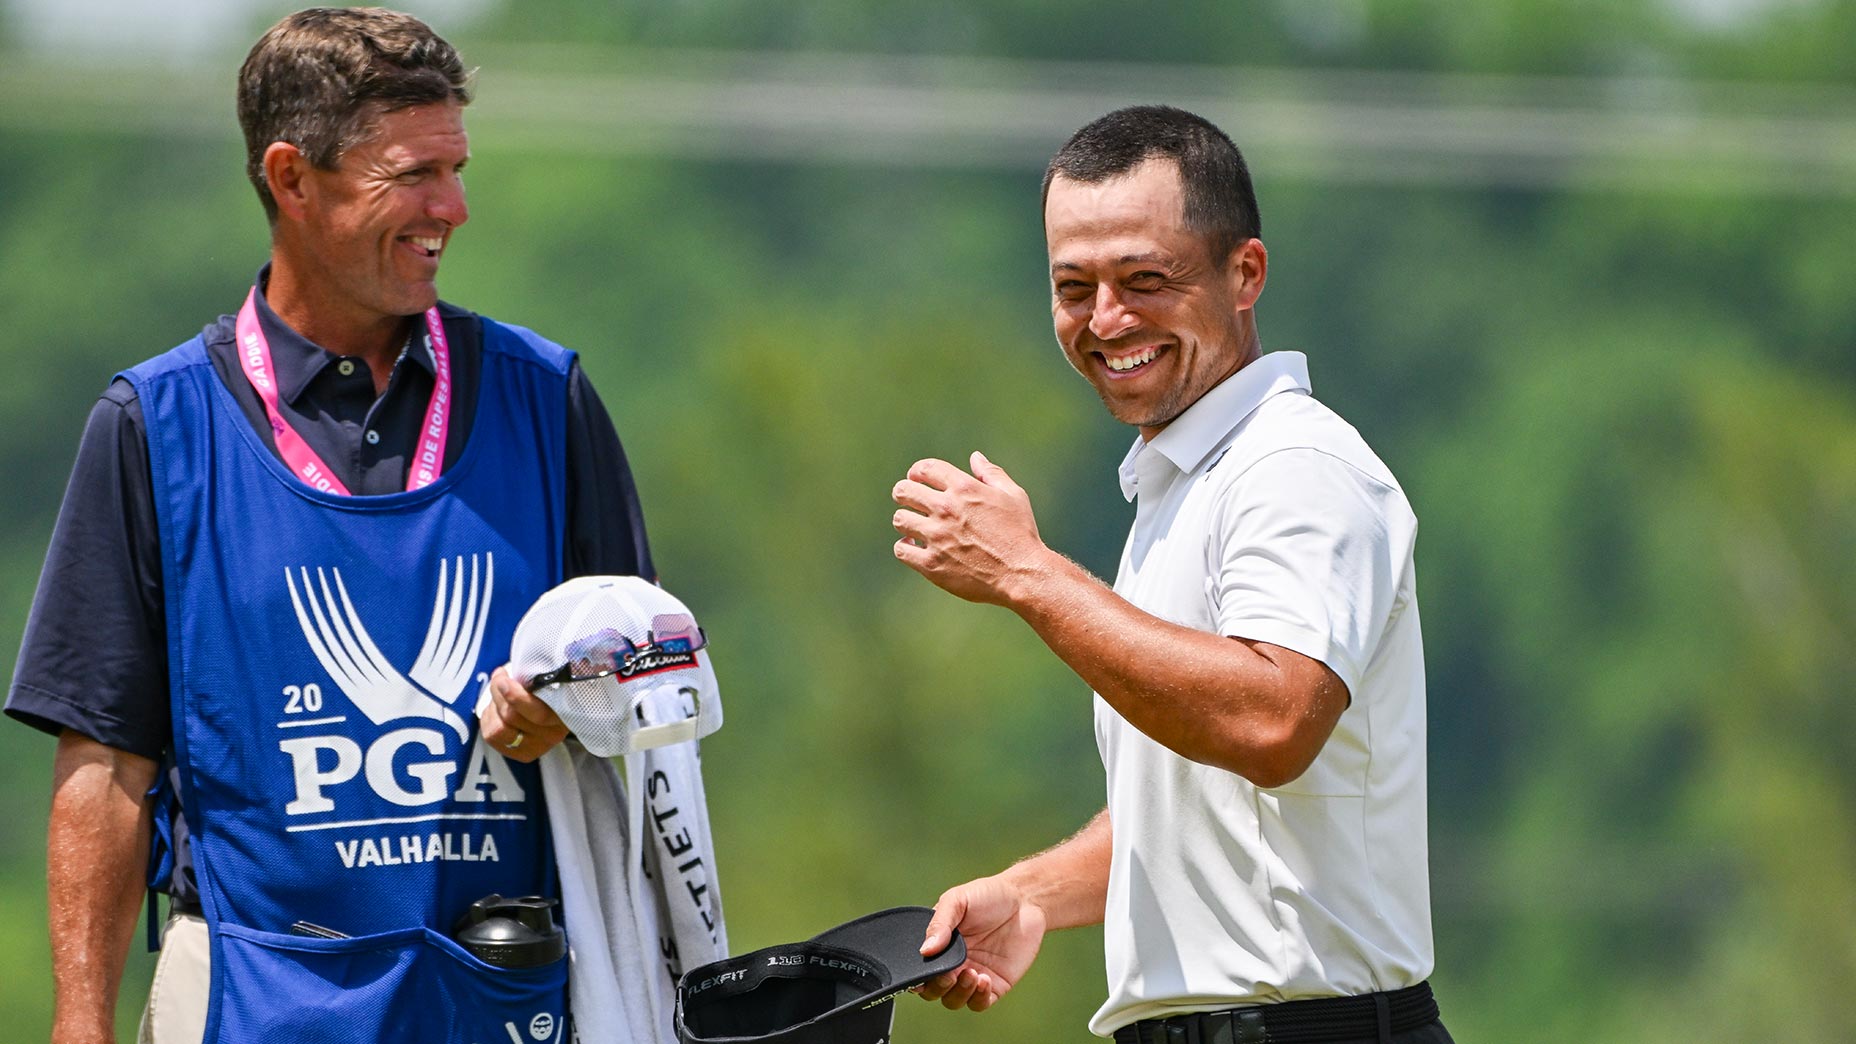 xander schauffele smiles at the PGA Championship next to caddie